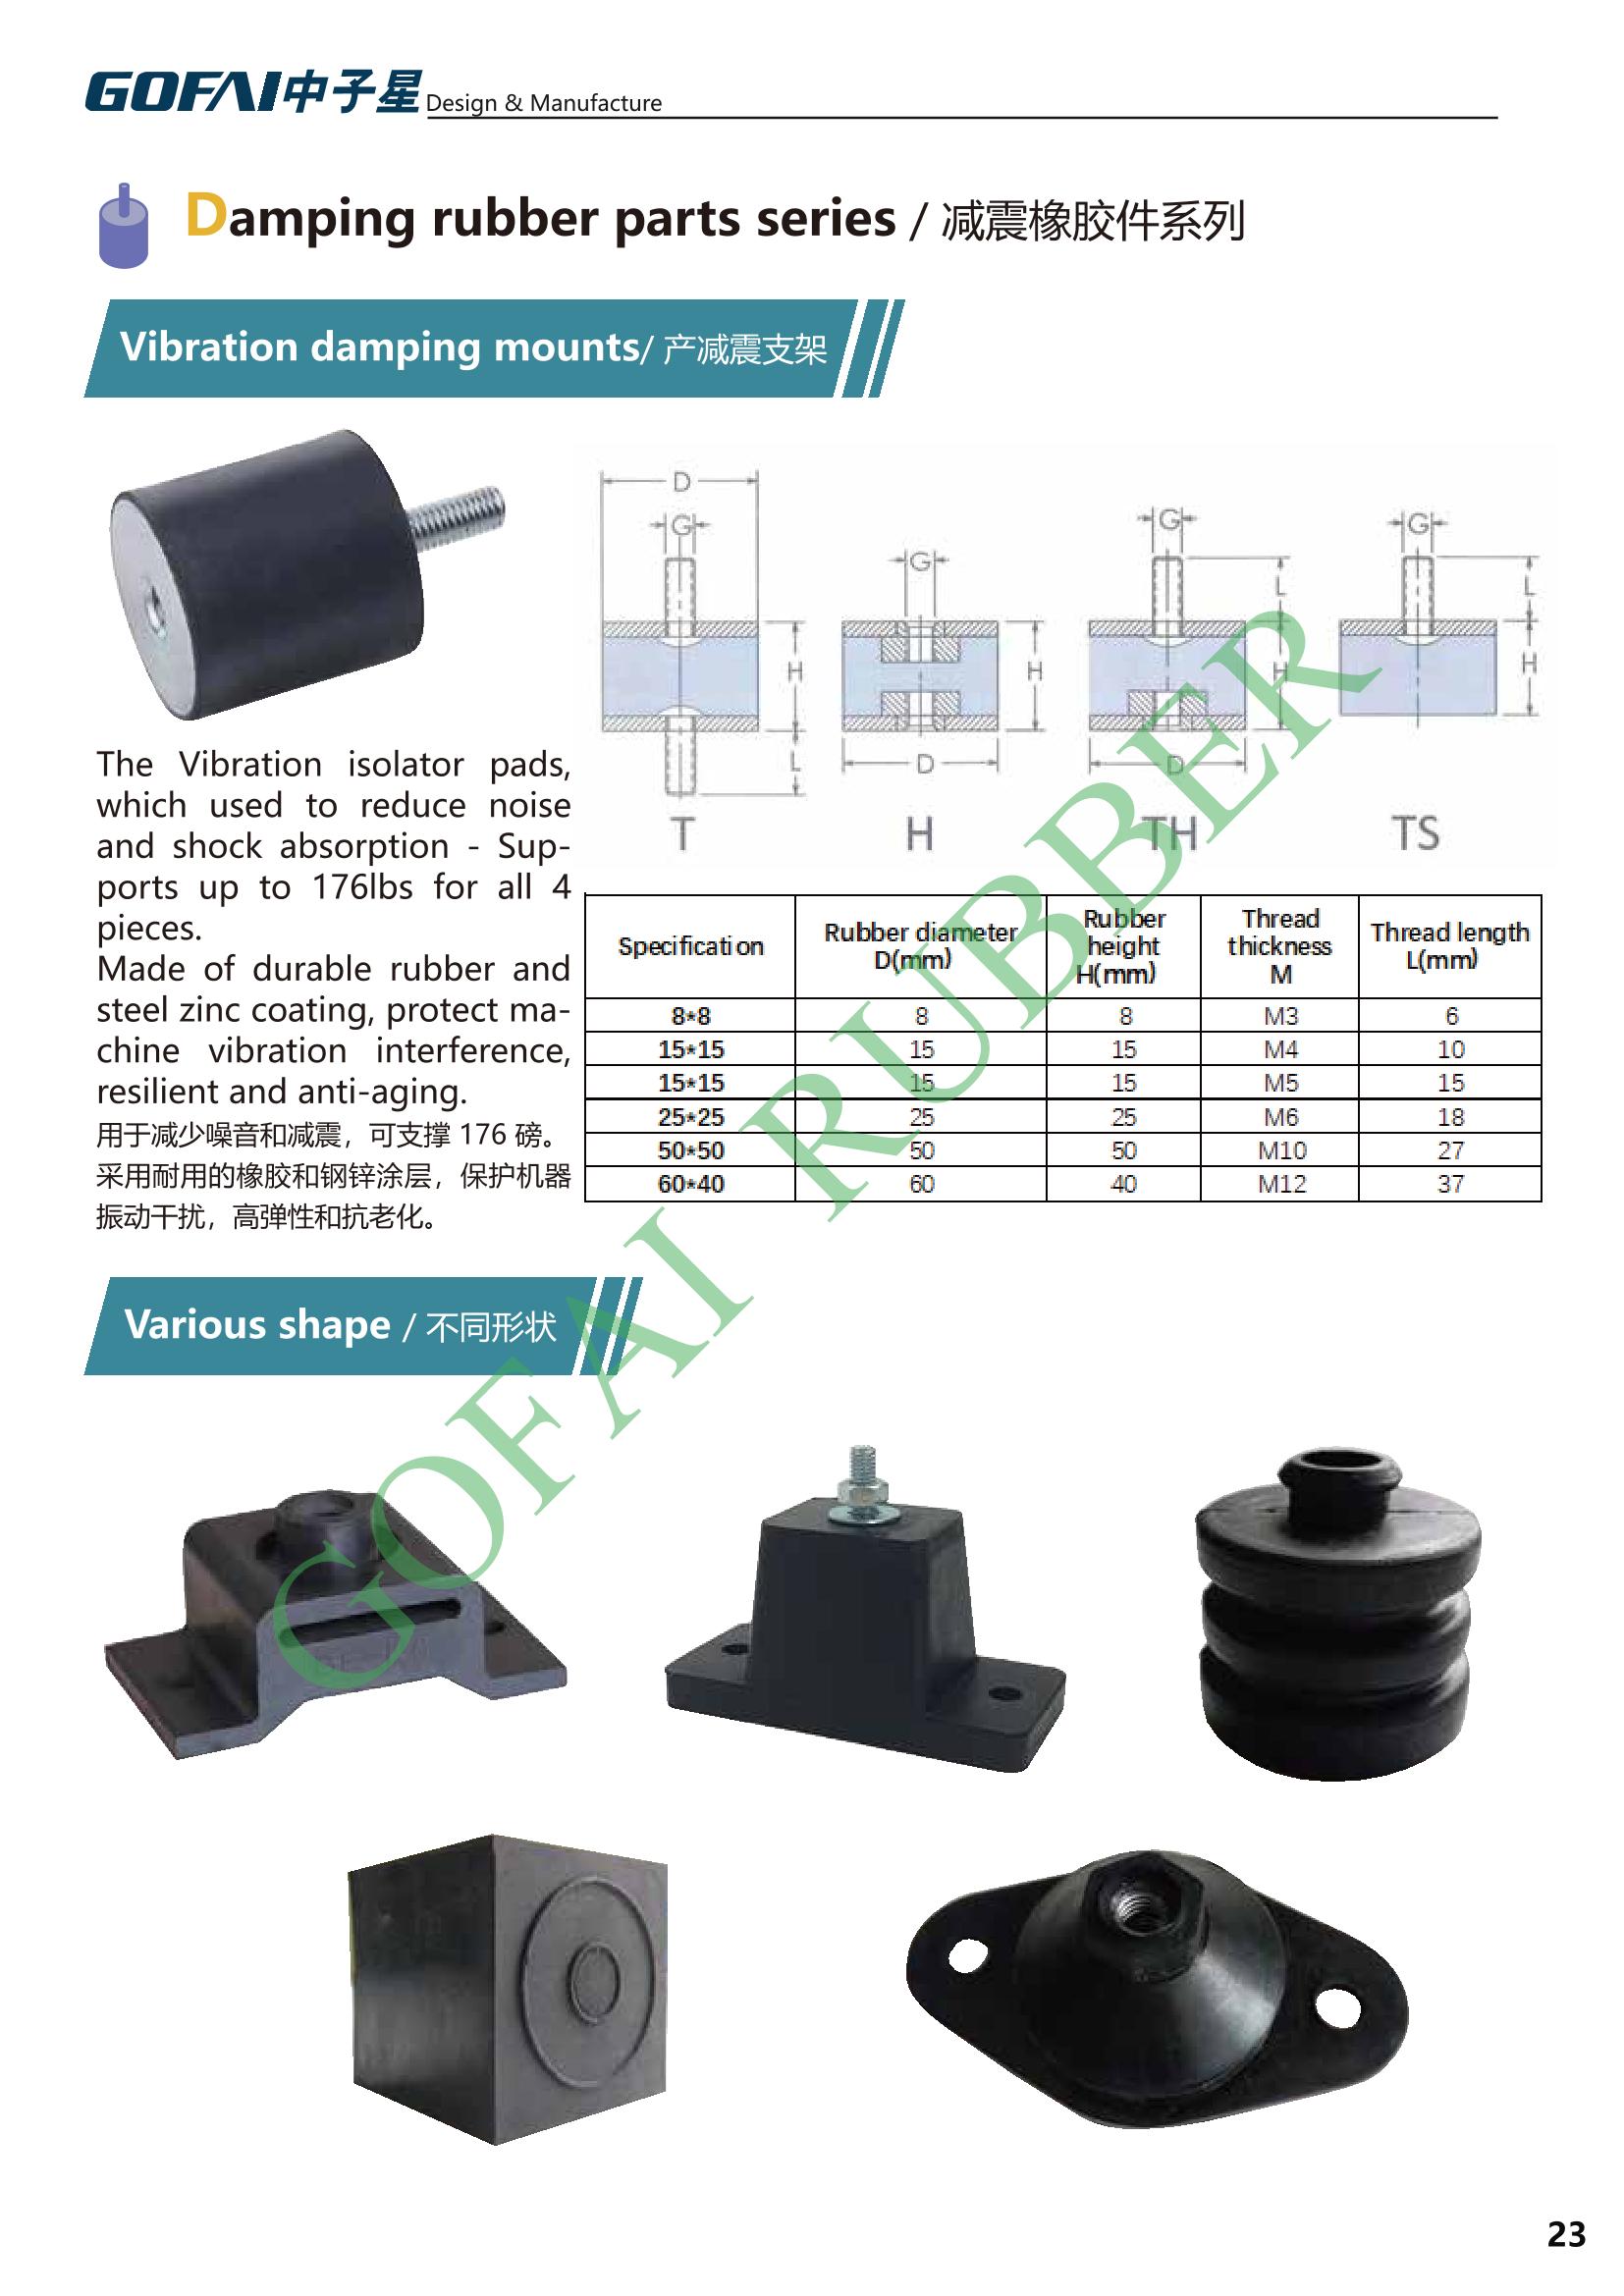 GOFAI rubberplastic products cataloge_23.jpg